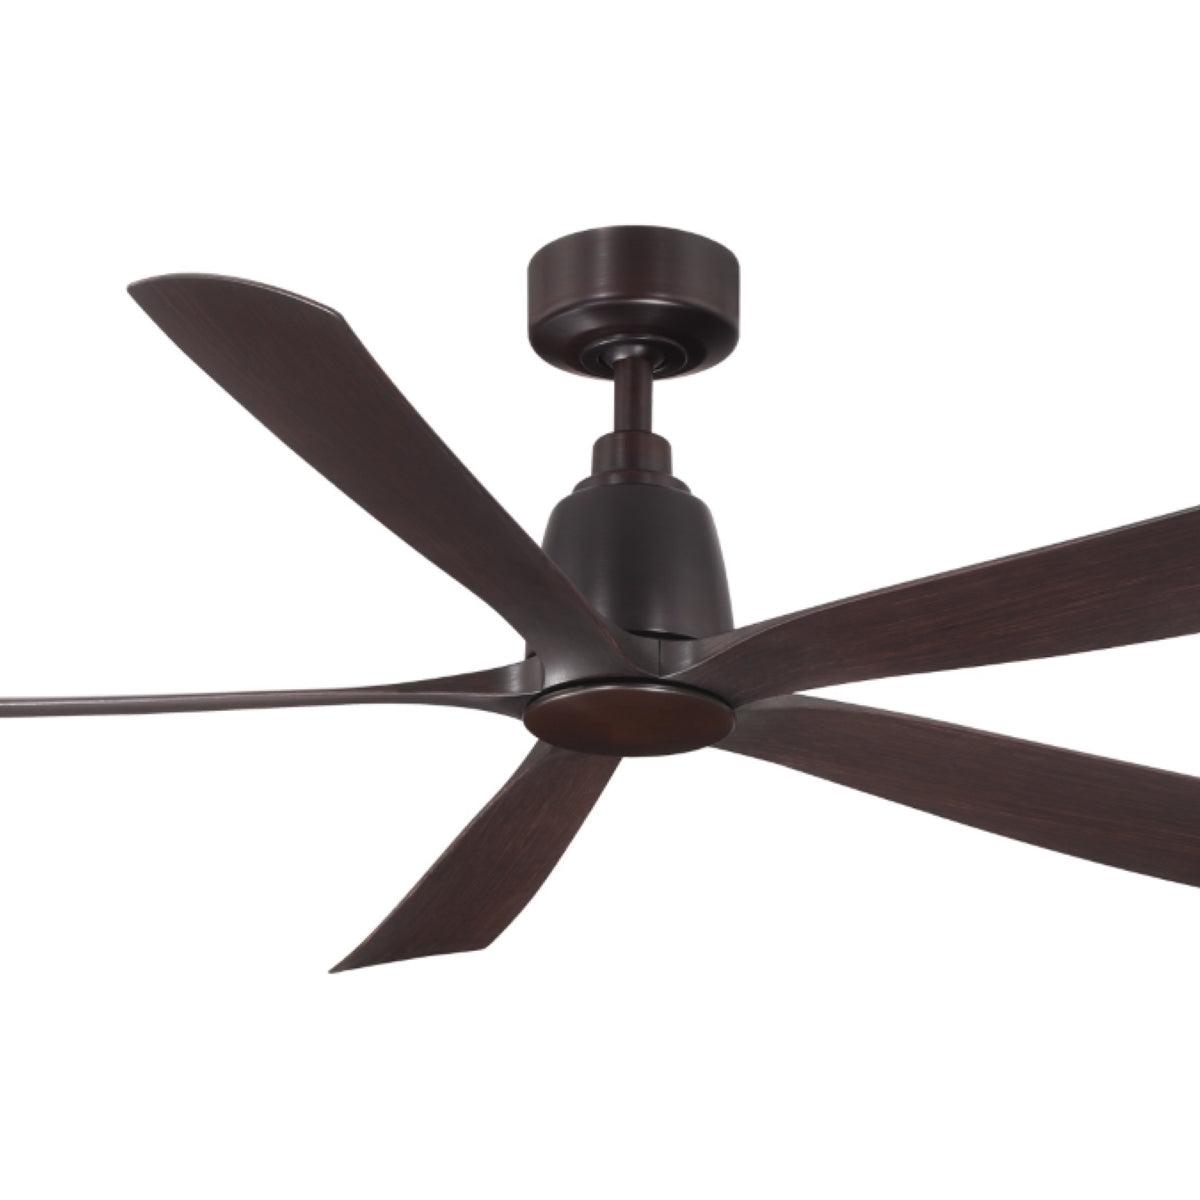 Kute5 52 Inch 5 Blades Indoor/Outdoor Ceiling Fan With Remote, Dark Bronze with Dark Walnut Blades - Bees Lighting